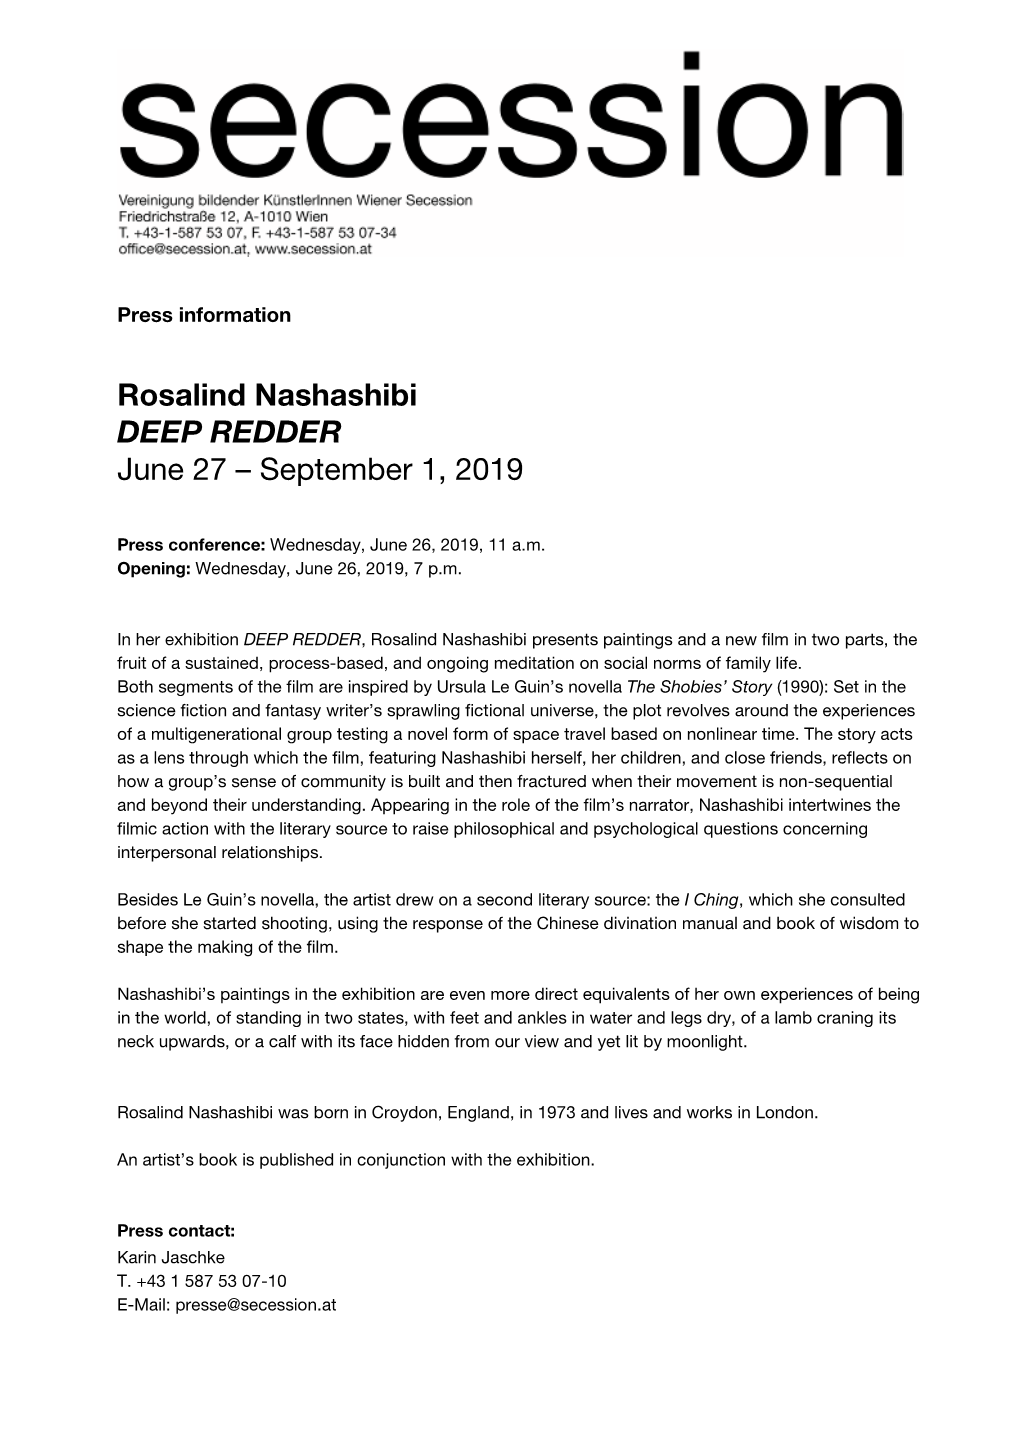 Rosalind Nashashibi DEEP REDDER June 27 – September 1, 2019